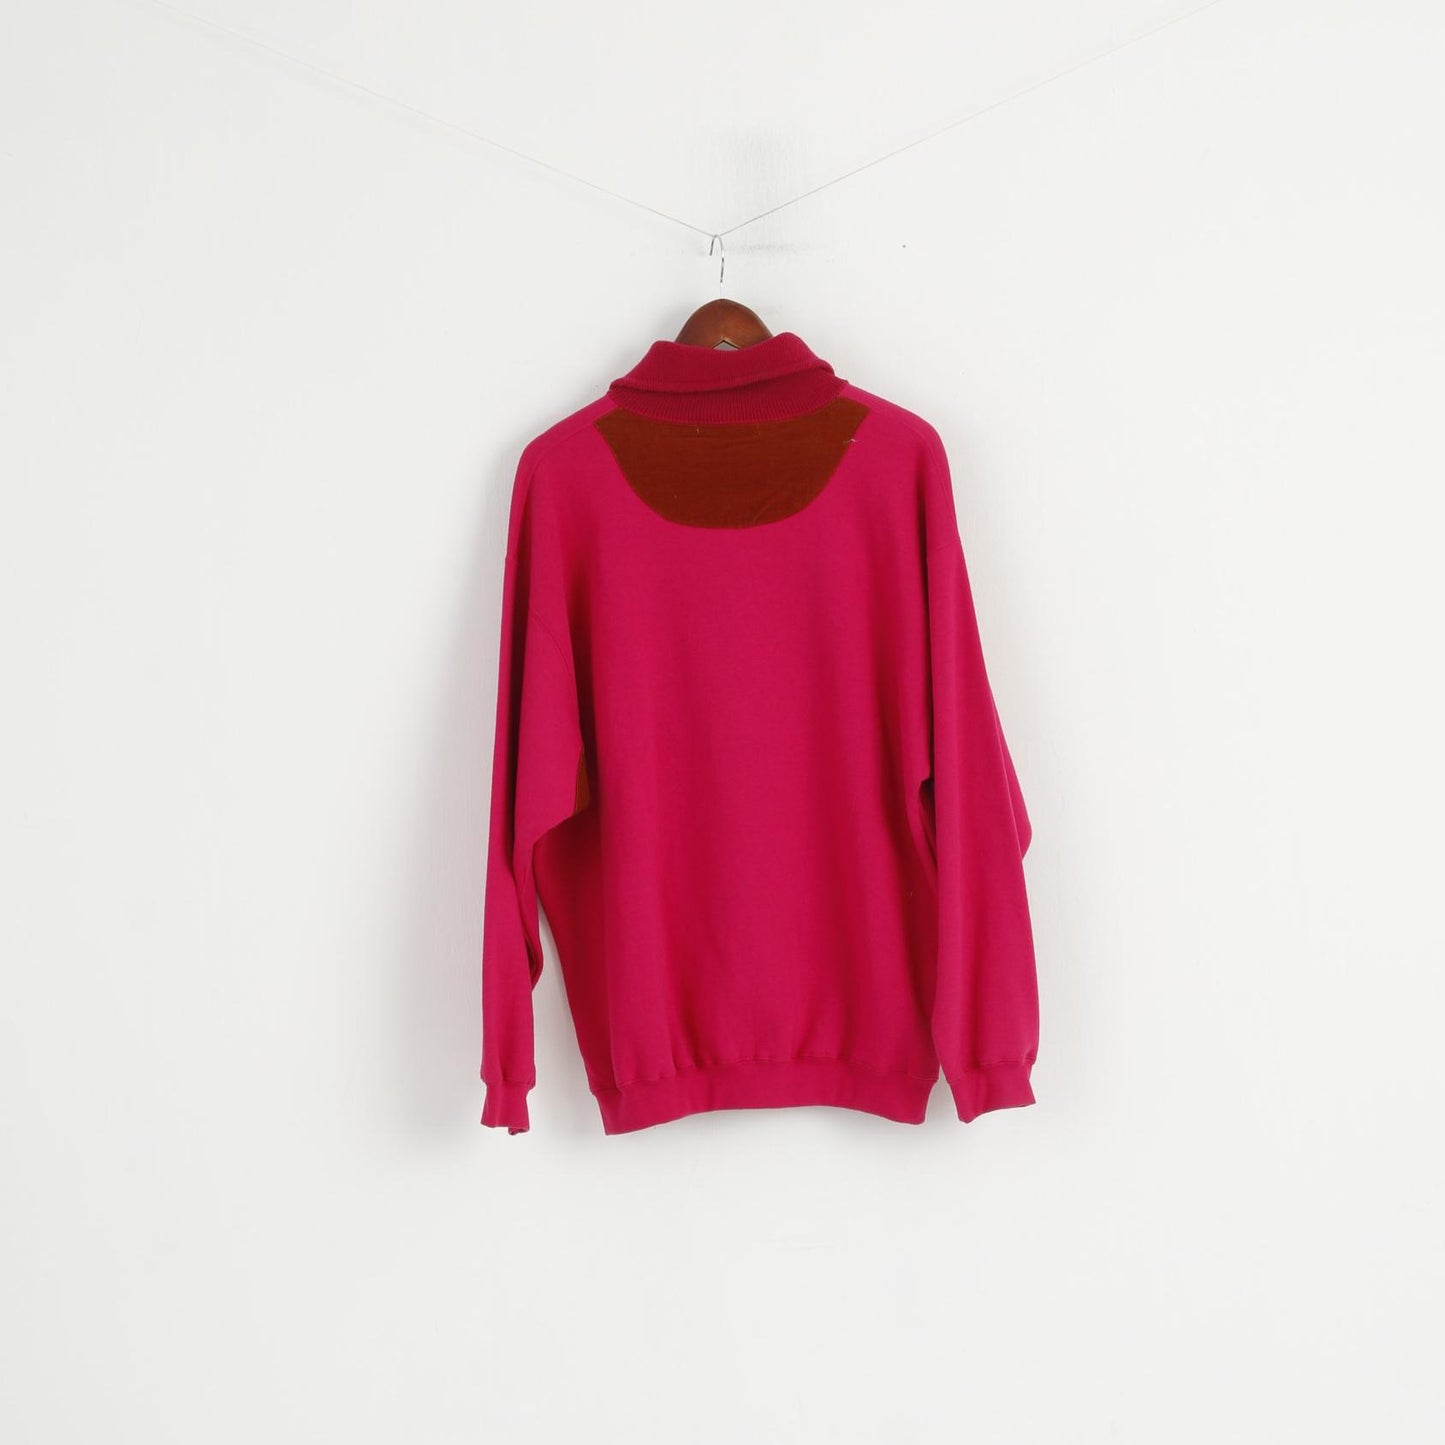 Marks & Spencer Women 14/16 42/44 L Sweatshirt Pink Nature Emroidered Top